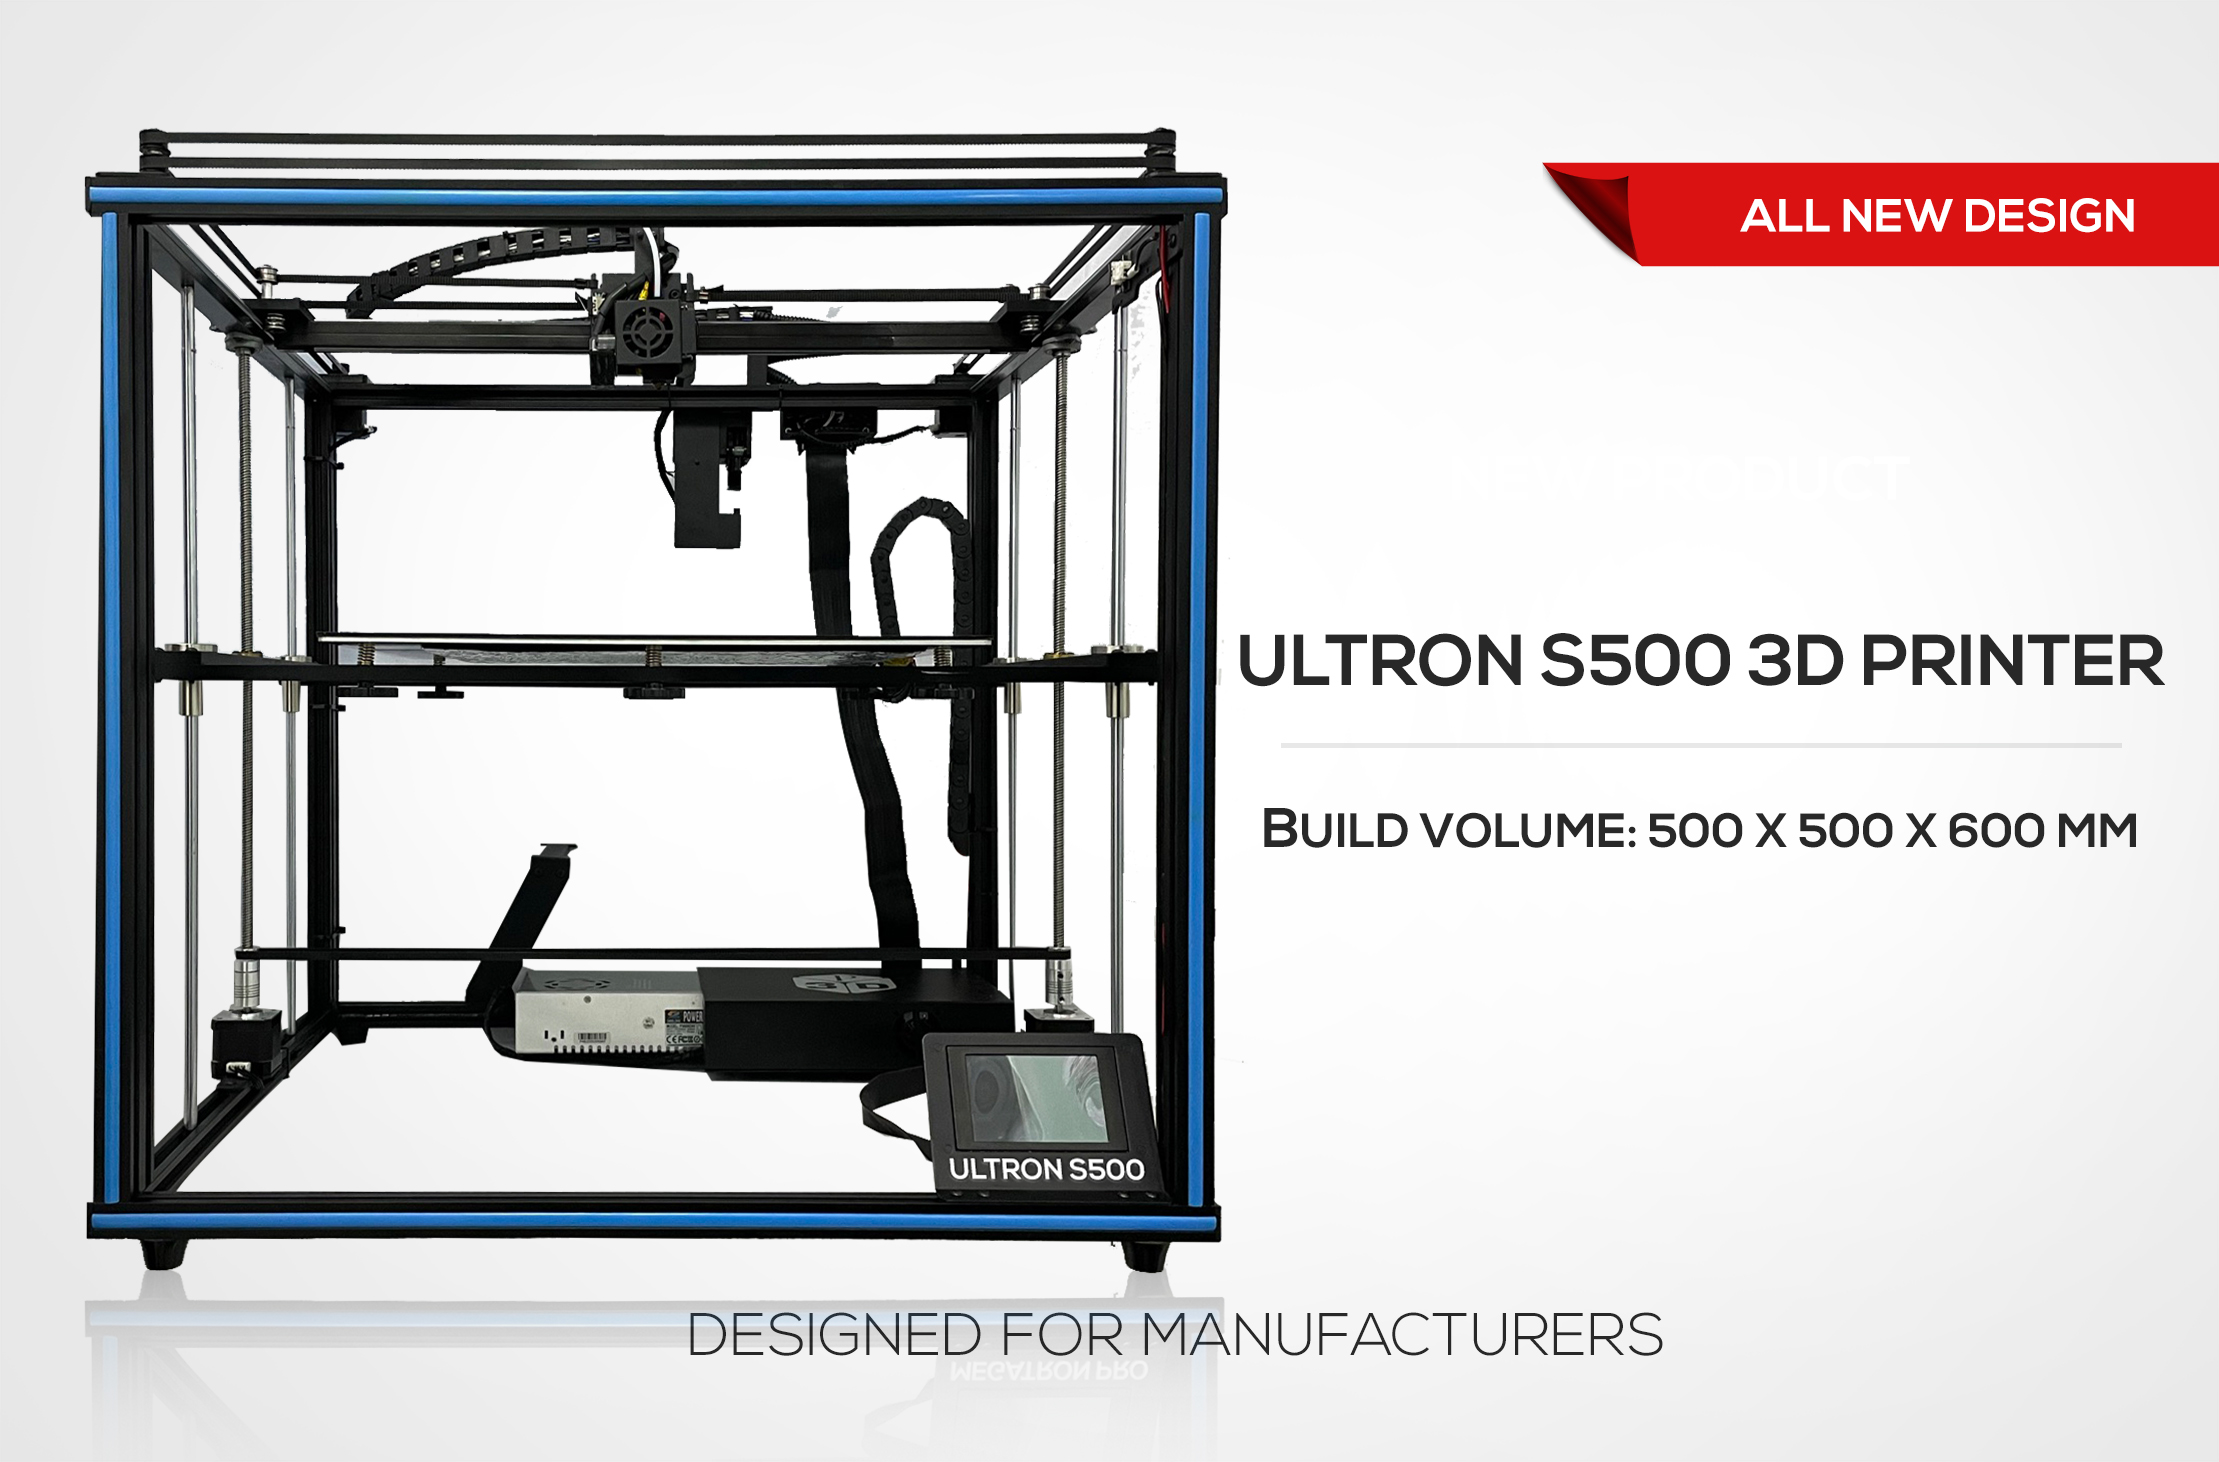 Ultron S500 3D Printer